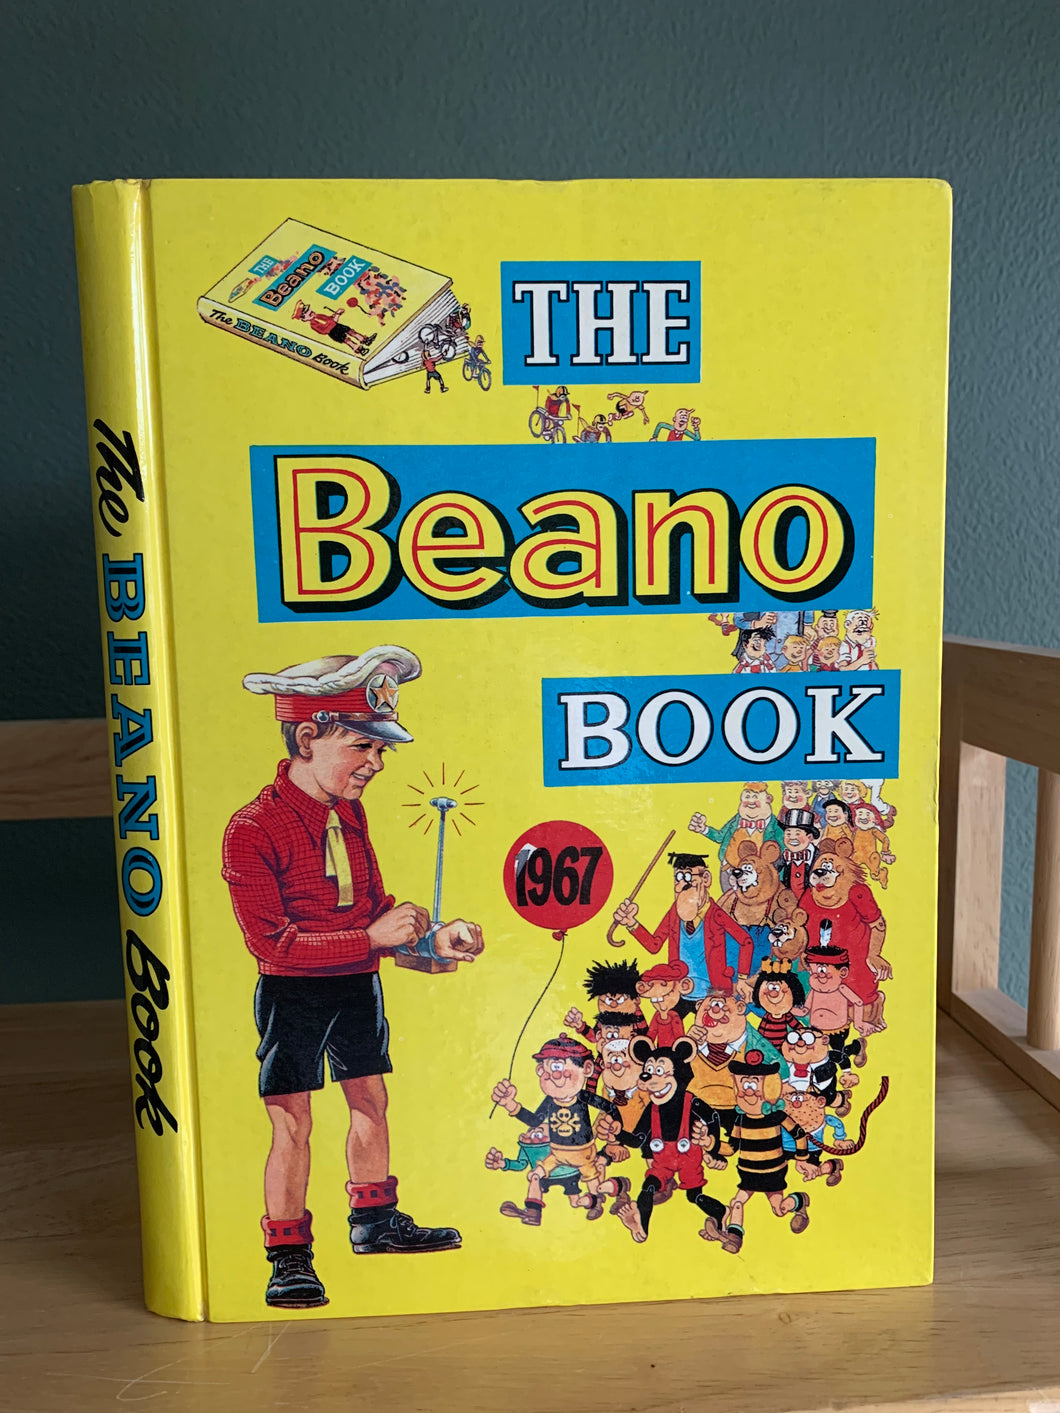 The Beano Book 1967